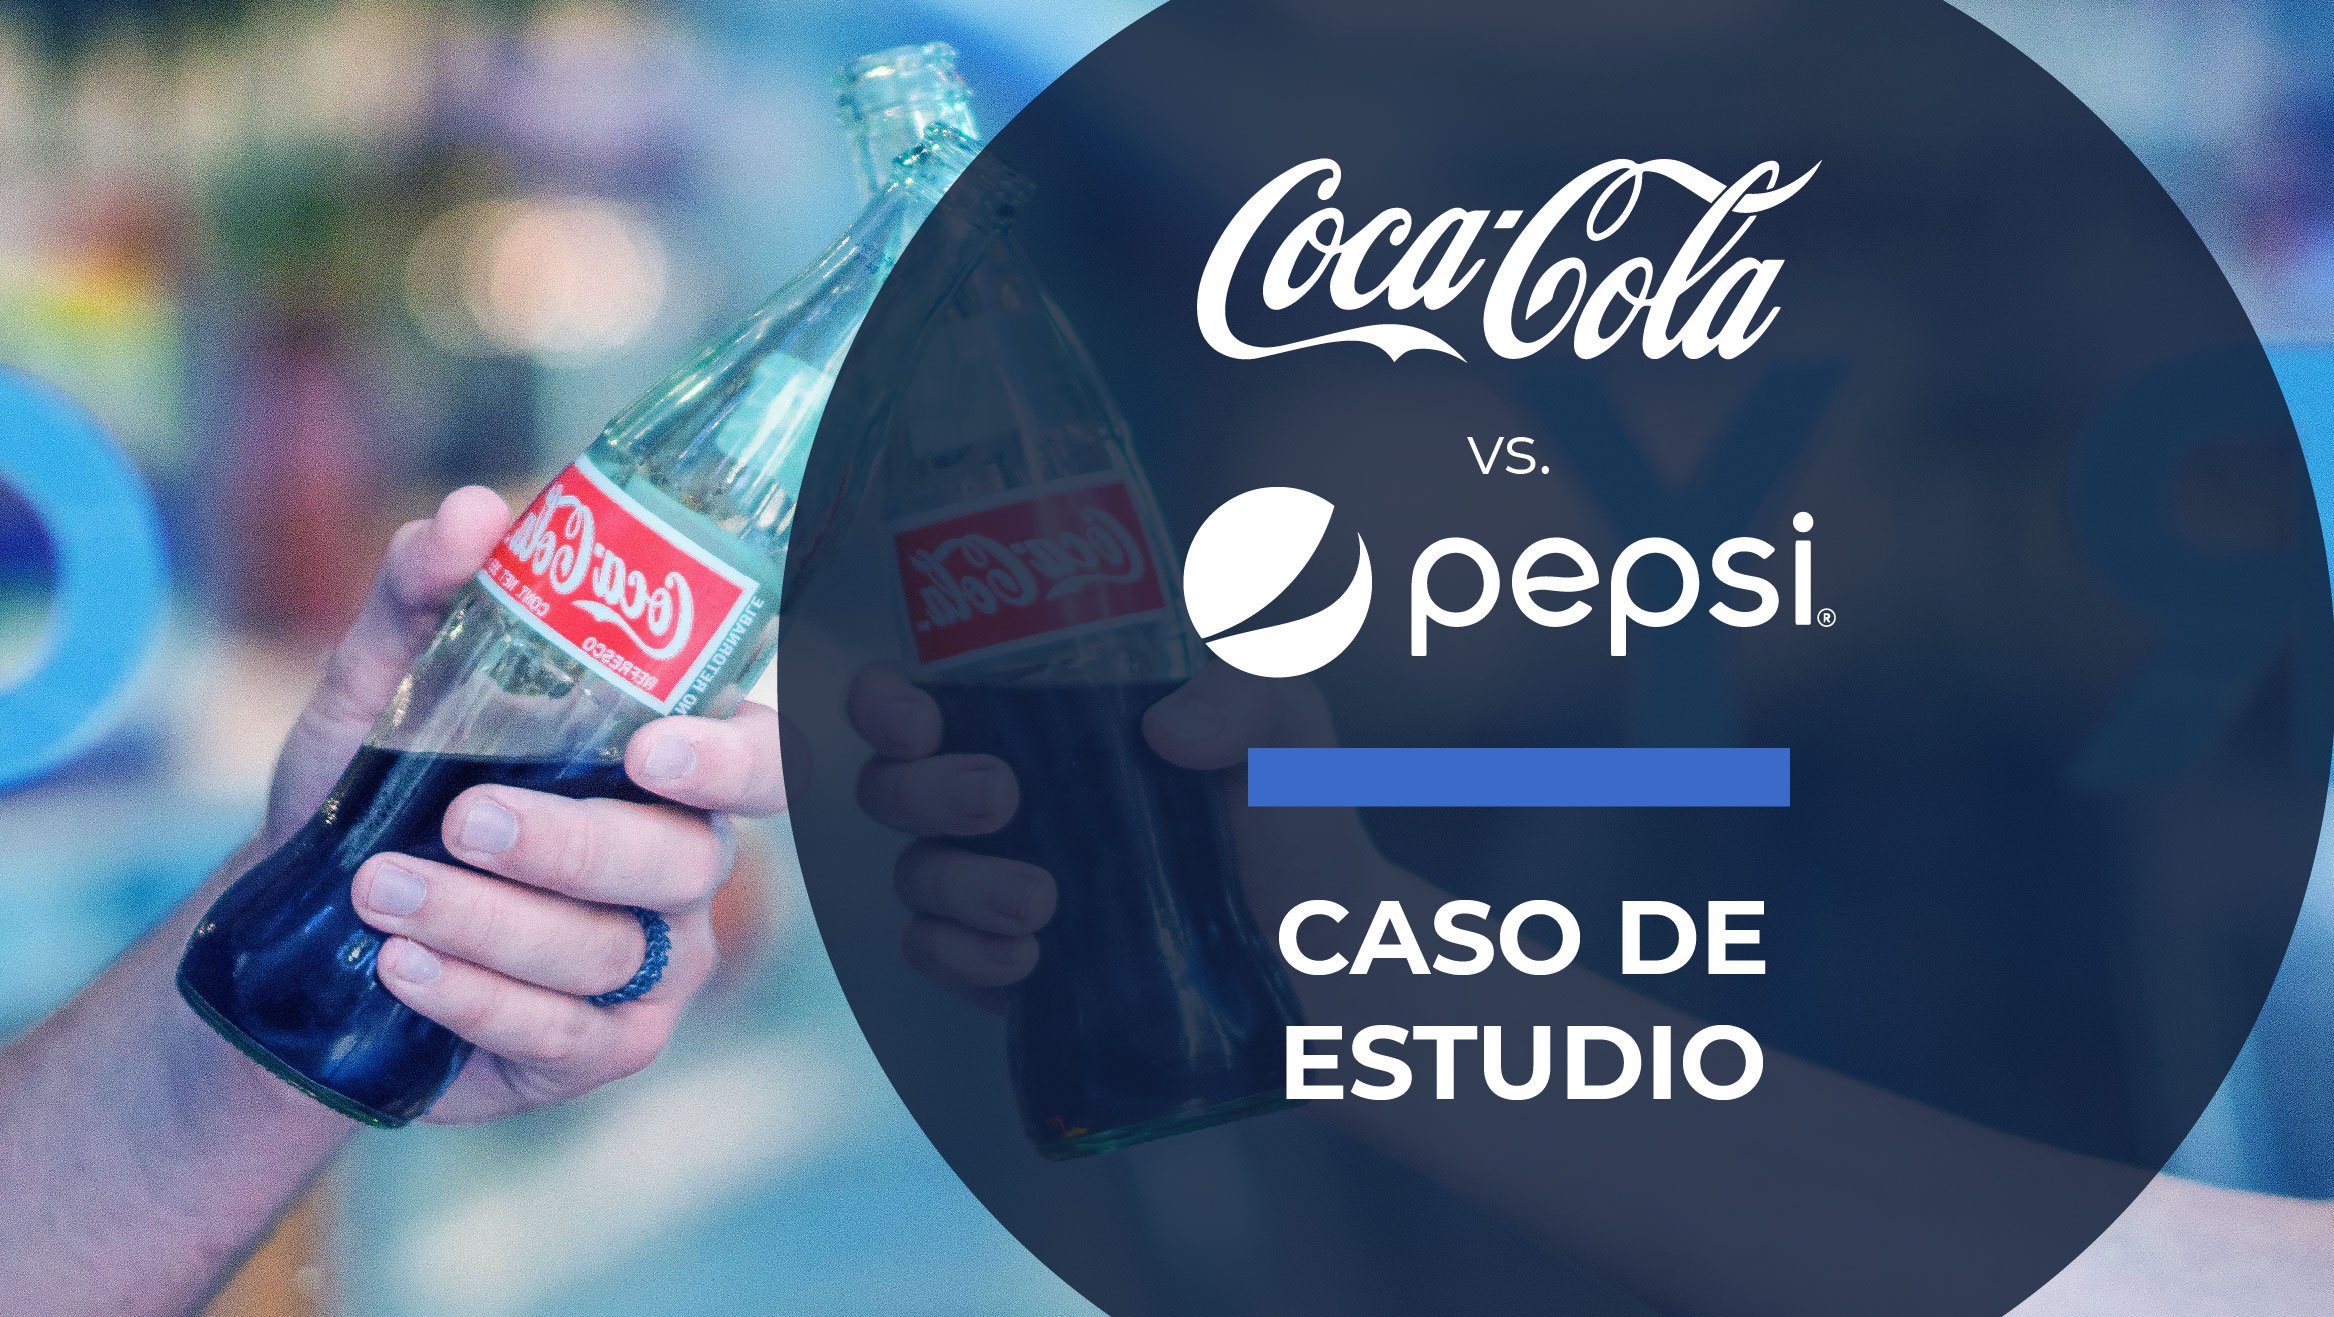 The Origin of the Name Pepsi